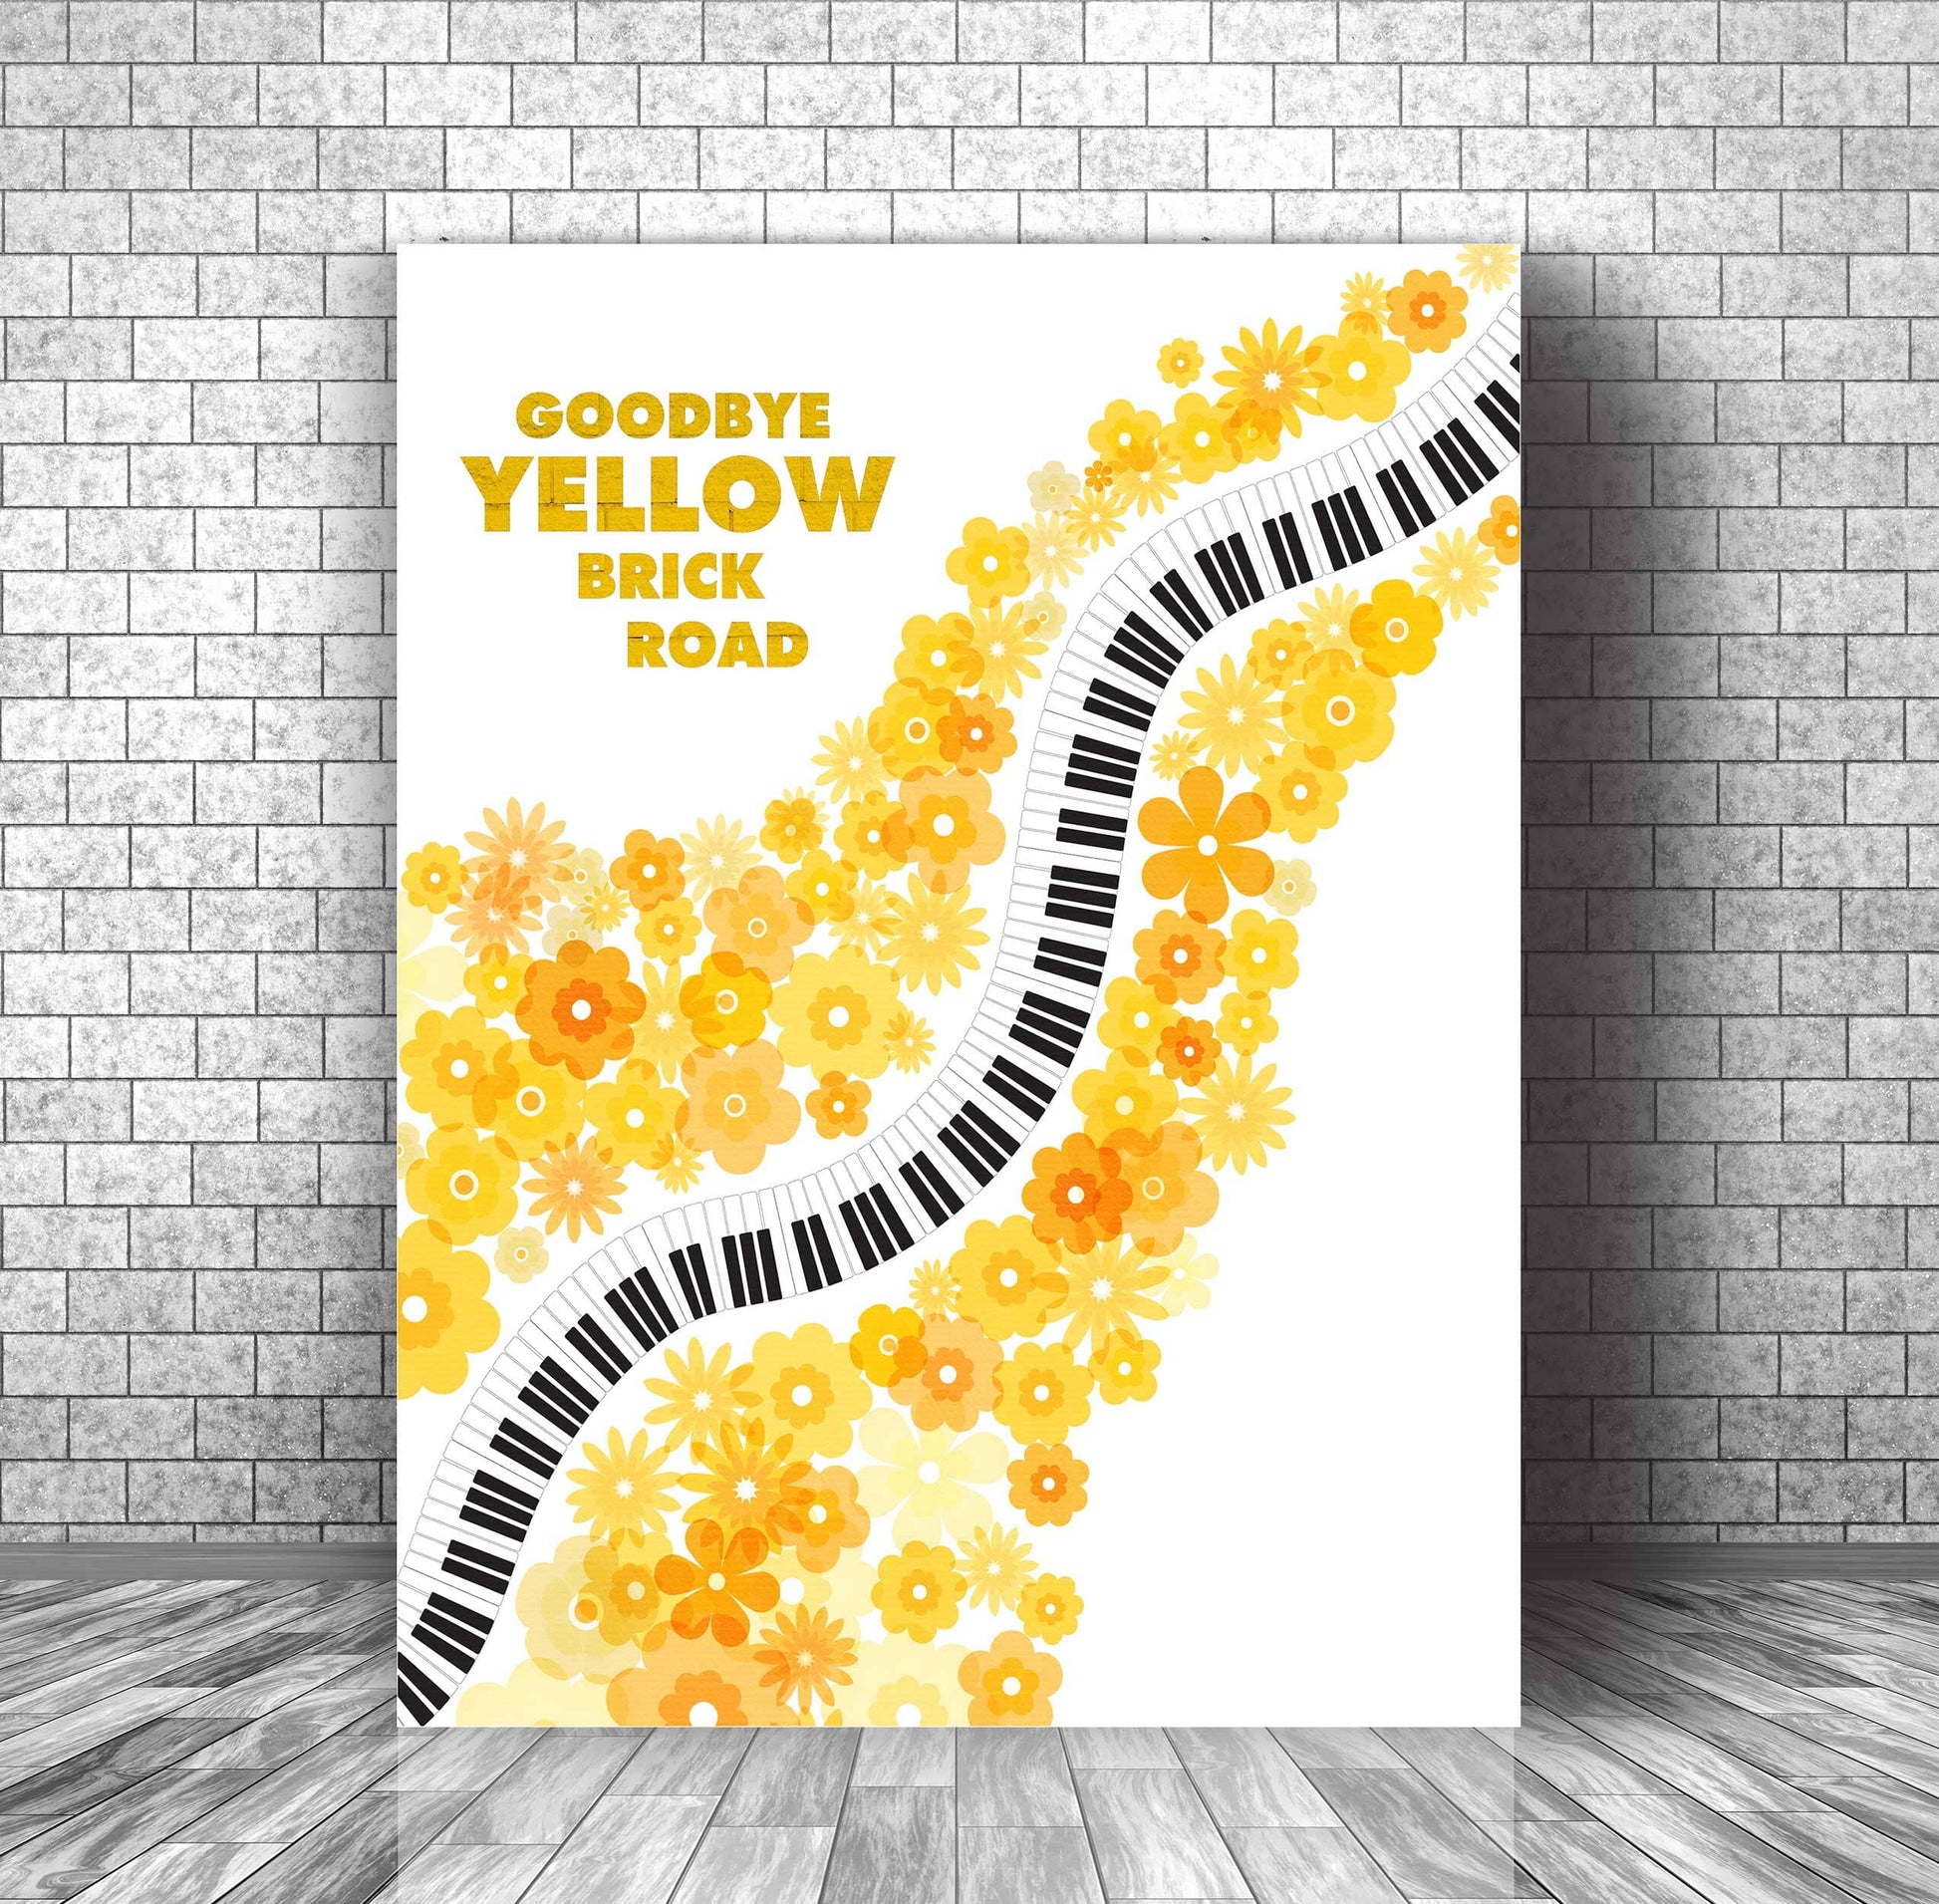 Goodbye Yellow Brick Road by Elton John - Song Lyric Print Song Lyrics Art Song Lyrics Art 11x14 Canvas Wrap 